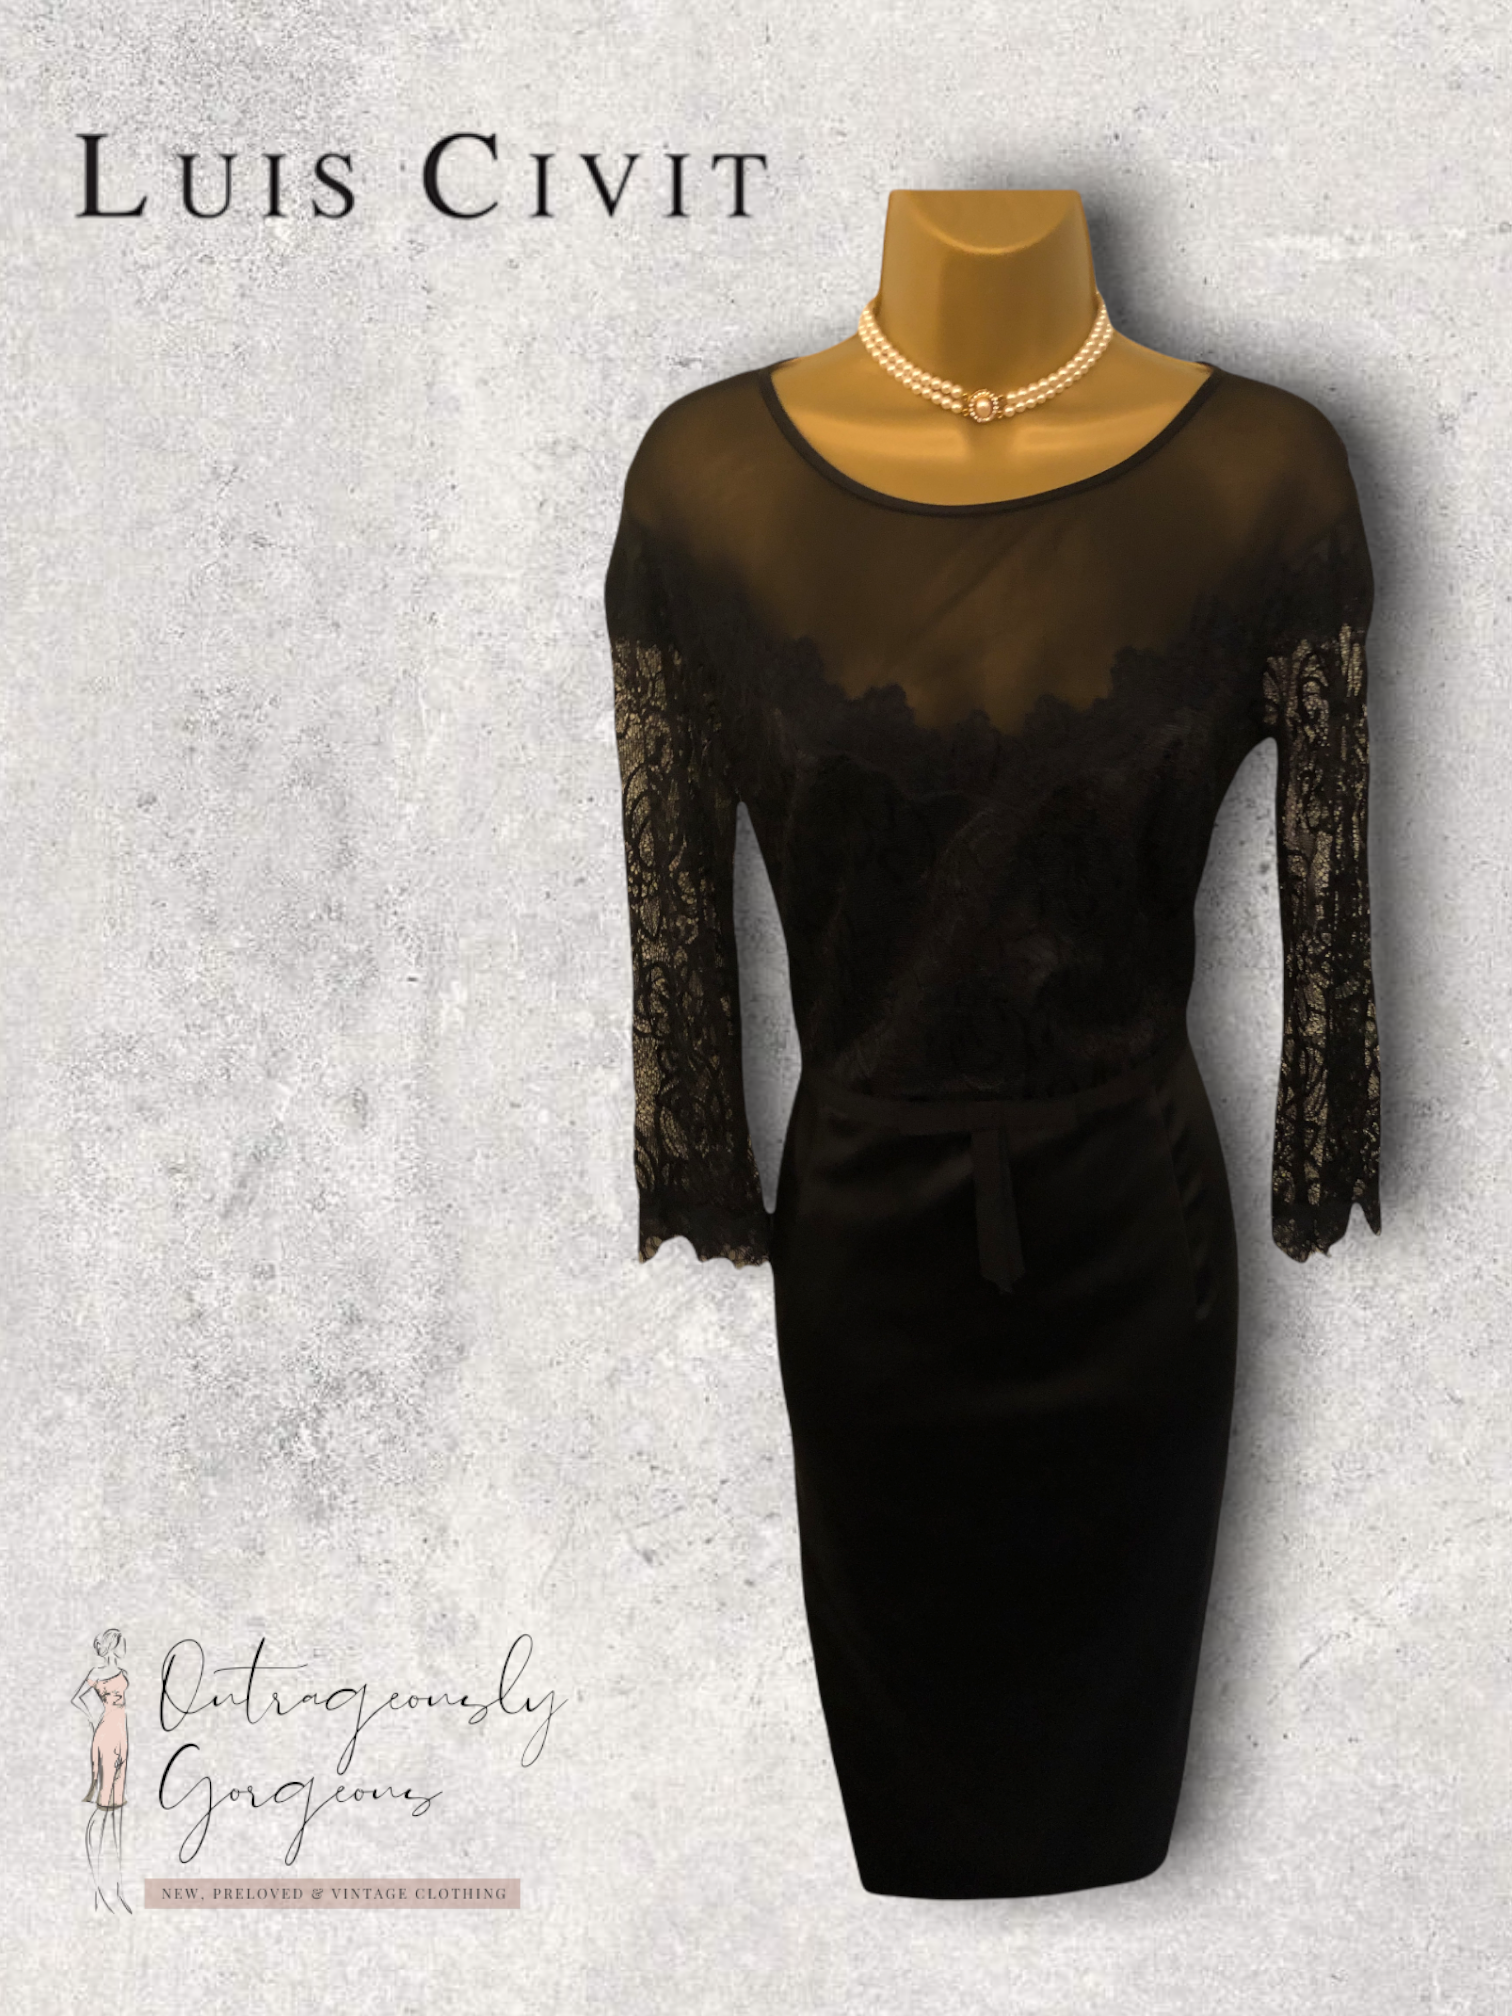 Luis Civit Black Long Sleeve Satin & Lace Dress UK 10 US 6 EU 38 BNWT RRP £395 Timeless Fashions